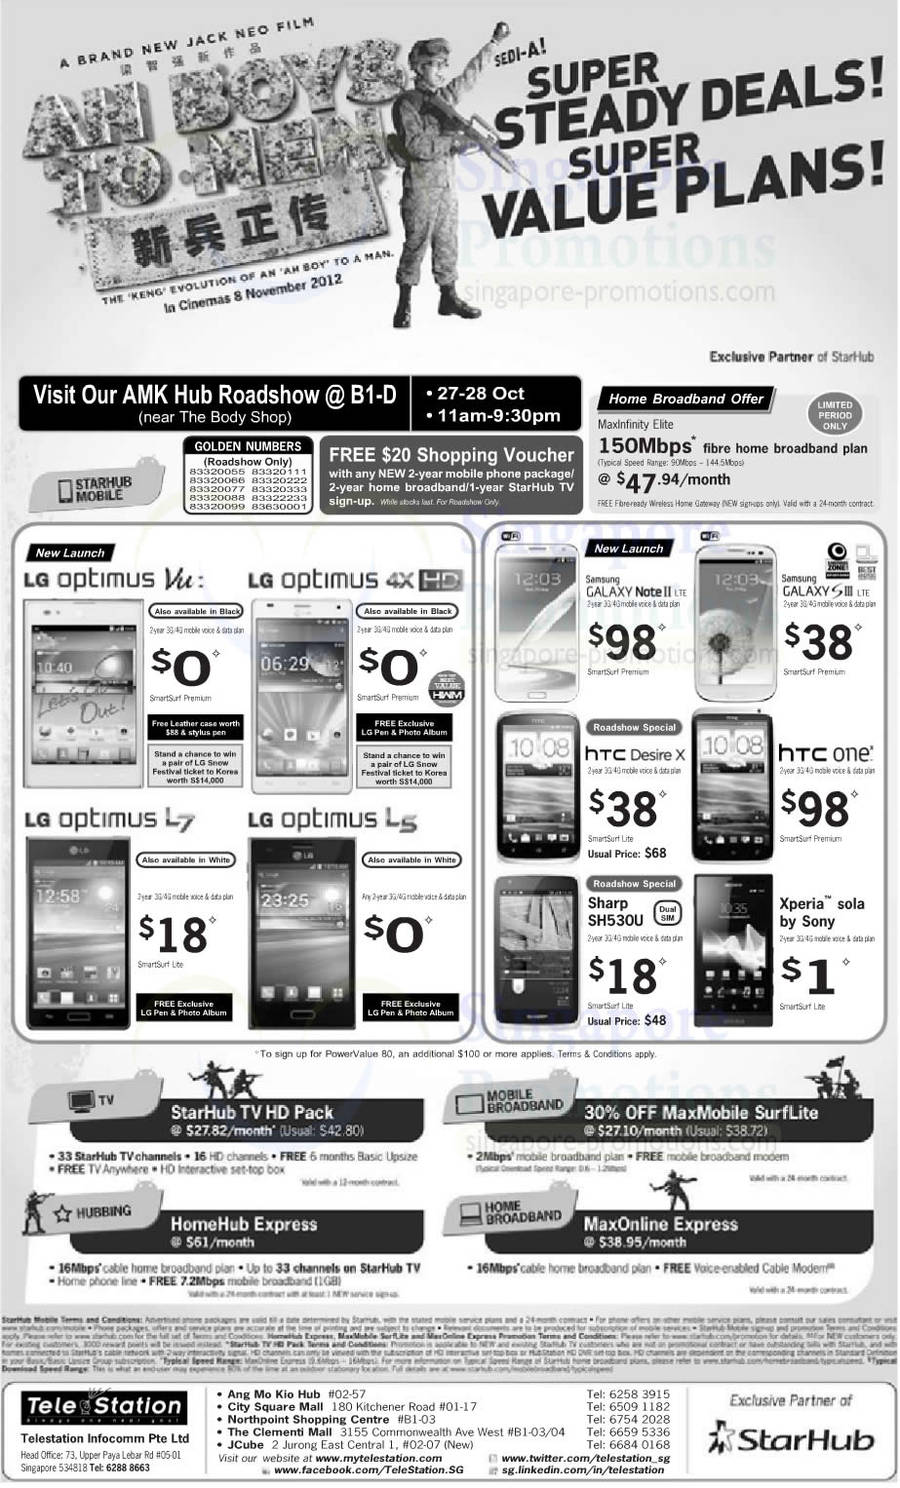 TeleStation LG Optimus Vu, 4X HD, L7, L5, Samsung Galaxy Note II LTE, S III LTE, HTC Desire X, One X, Sharp SH530U, Sony Xperia Sola